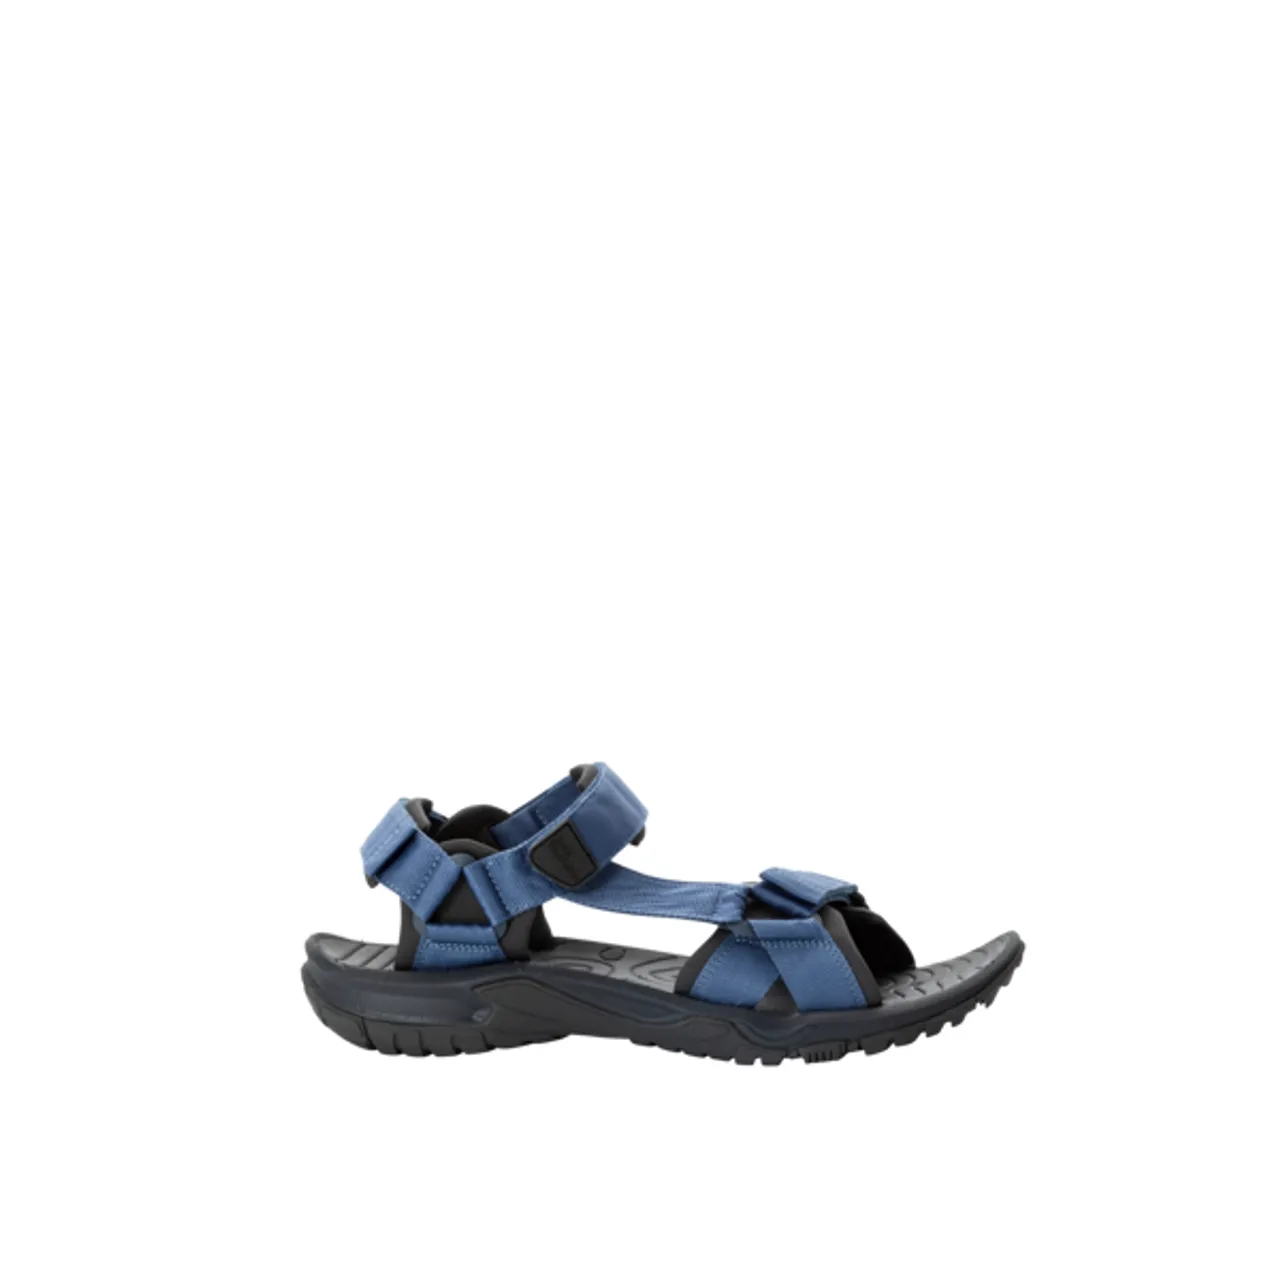 Sandale JACK WOLFSKIN "LAKEWOOD RIDE SANDAL M" Gr. 42, blau Schuhe Damen Outdoor-Schuhe